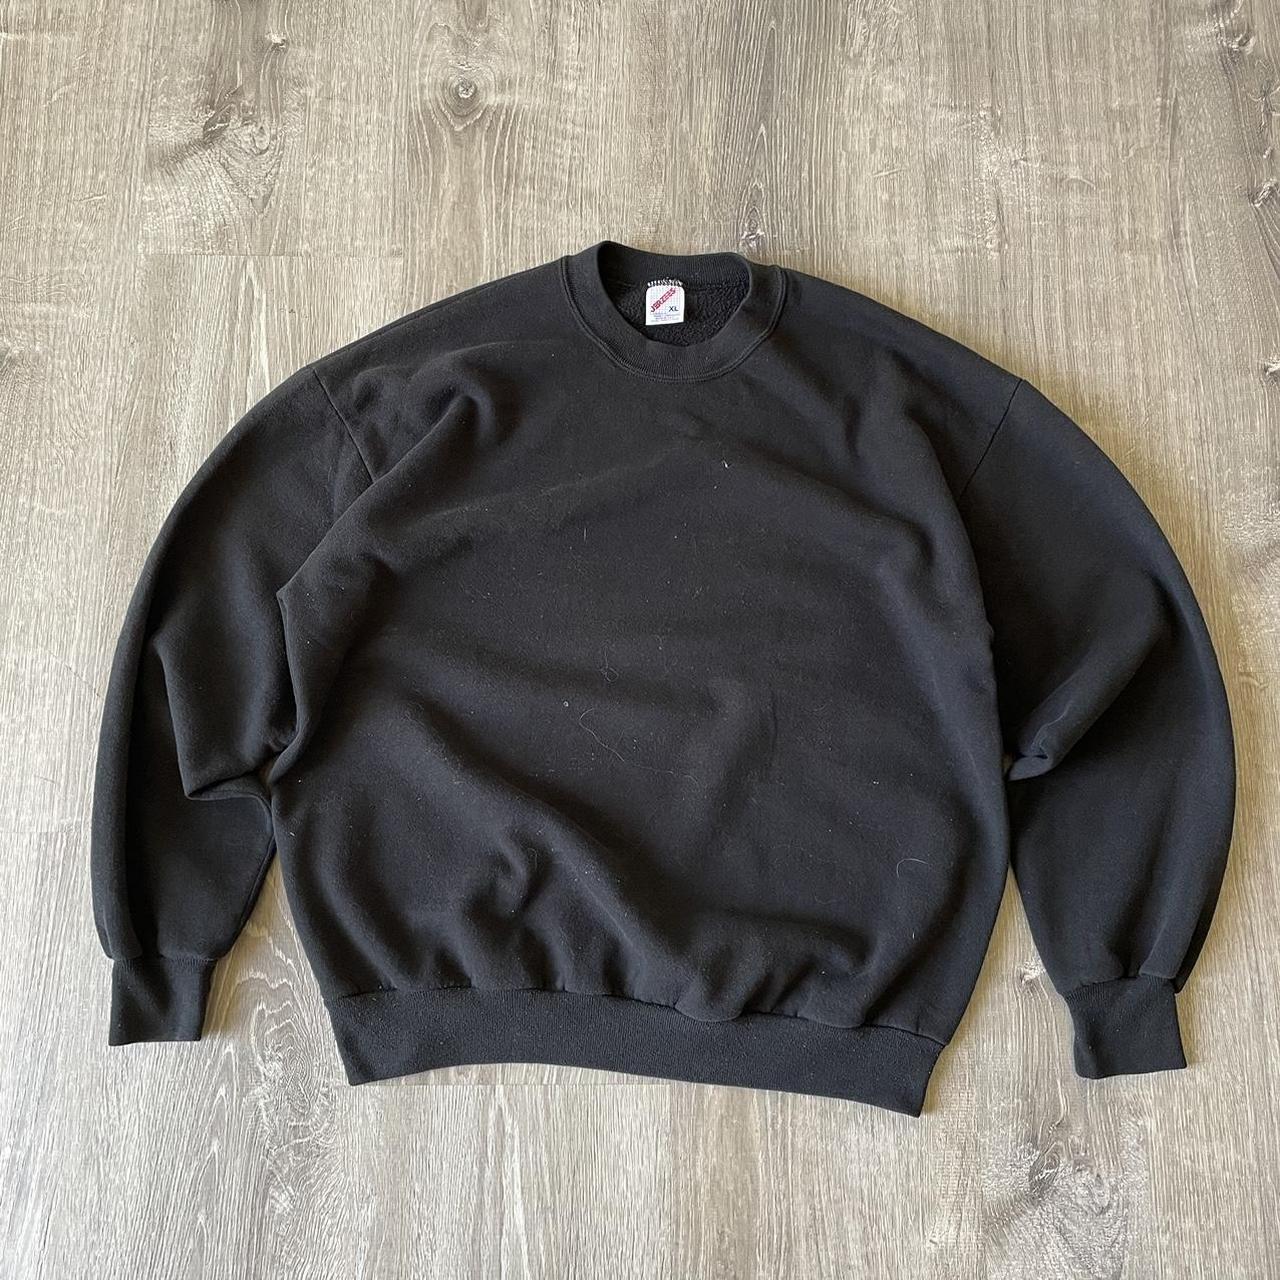 Vintage Black Blank Sweatshirt size XL made in... - Depop